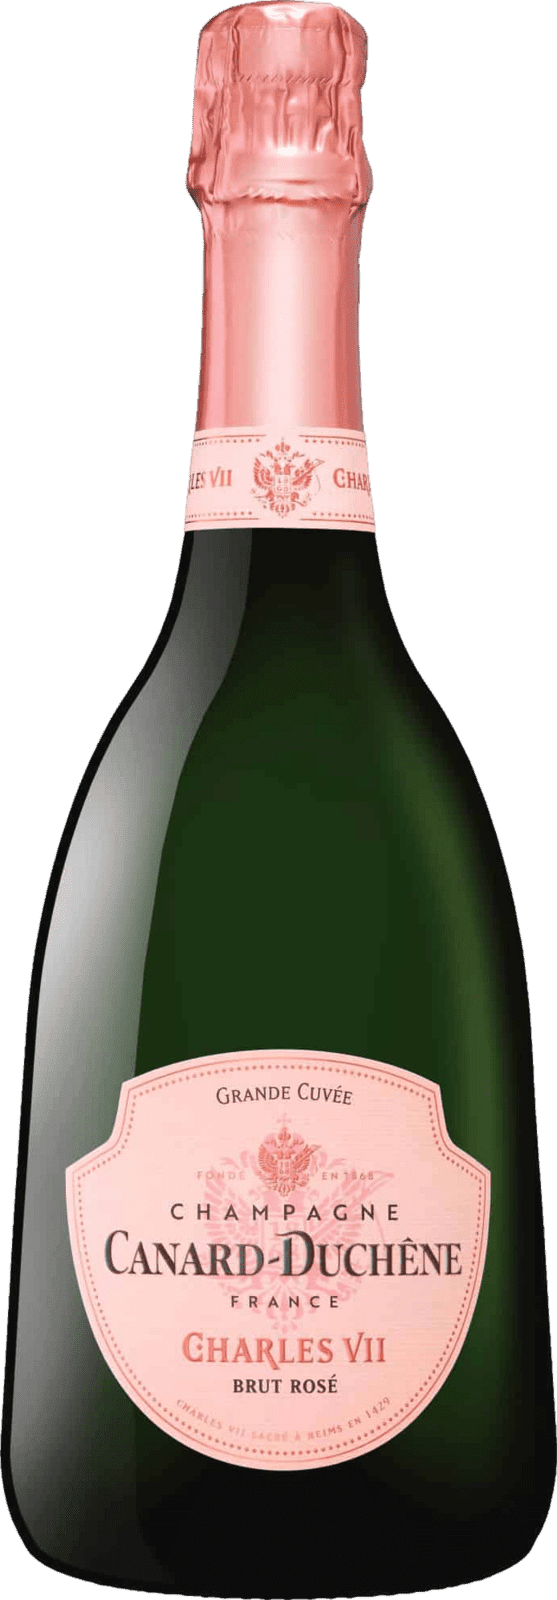 Champagne Canard-Duchene Grande Cuvee Charles VII Rose